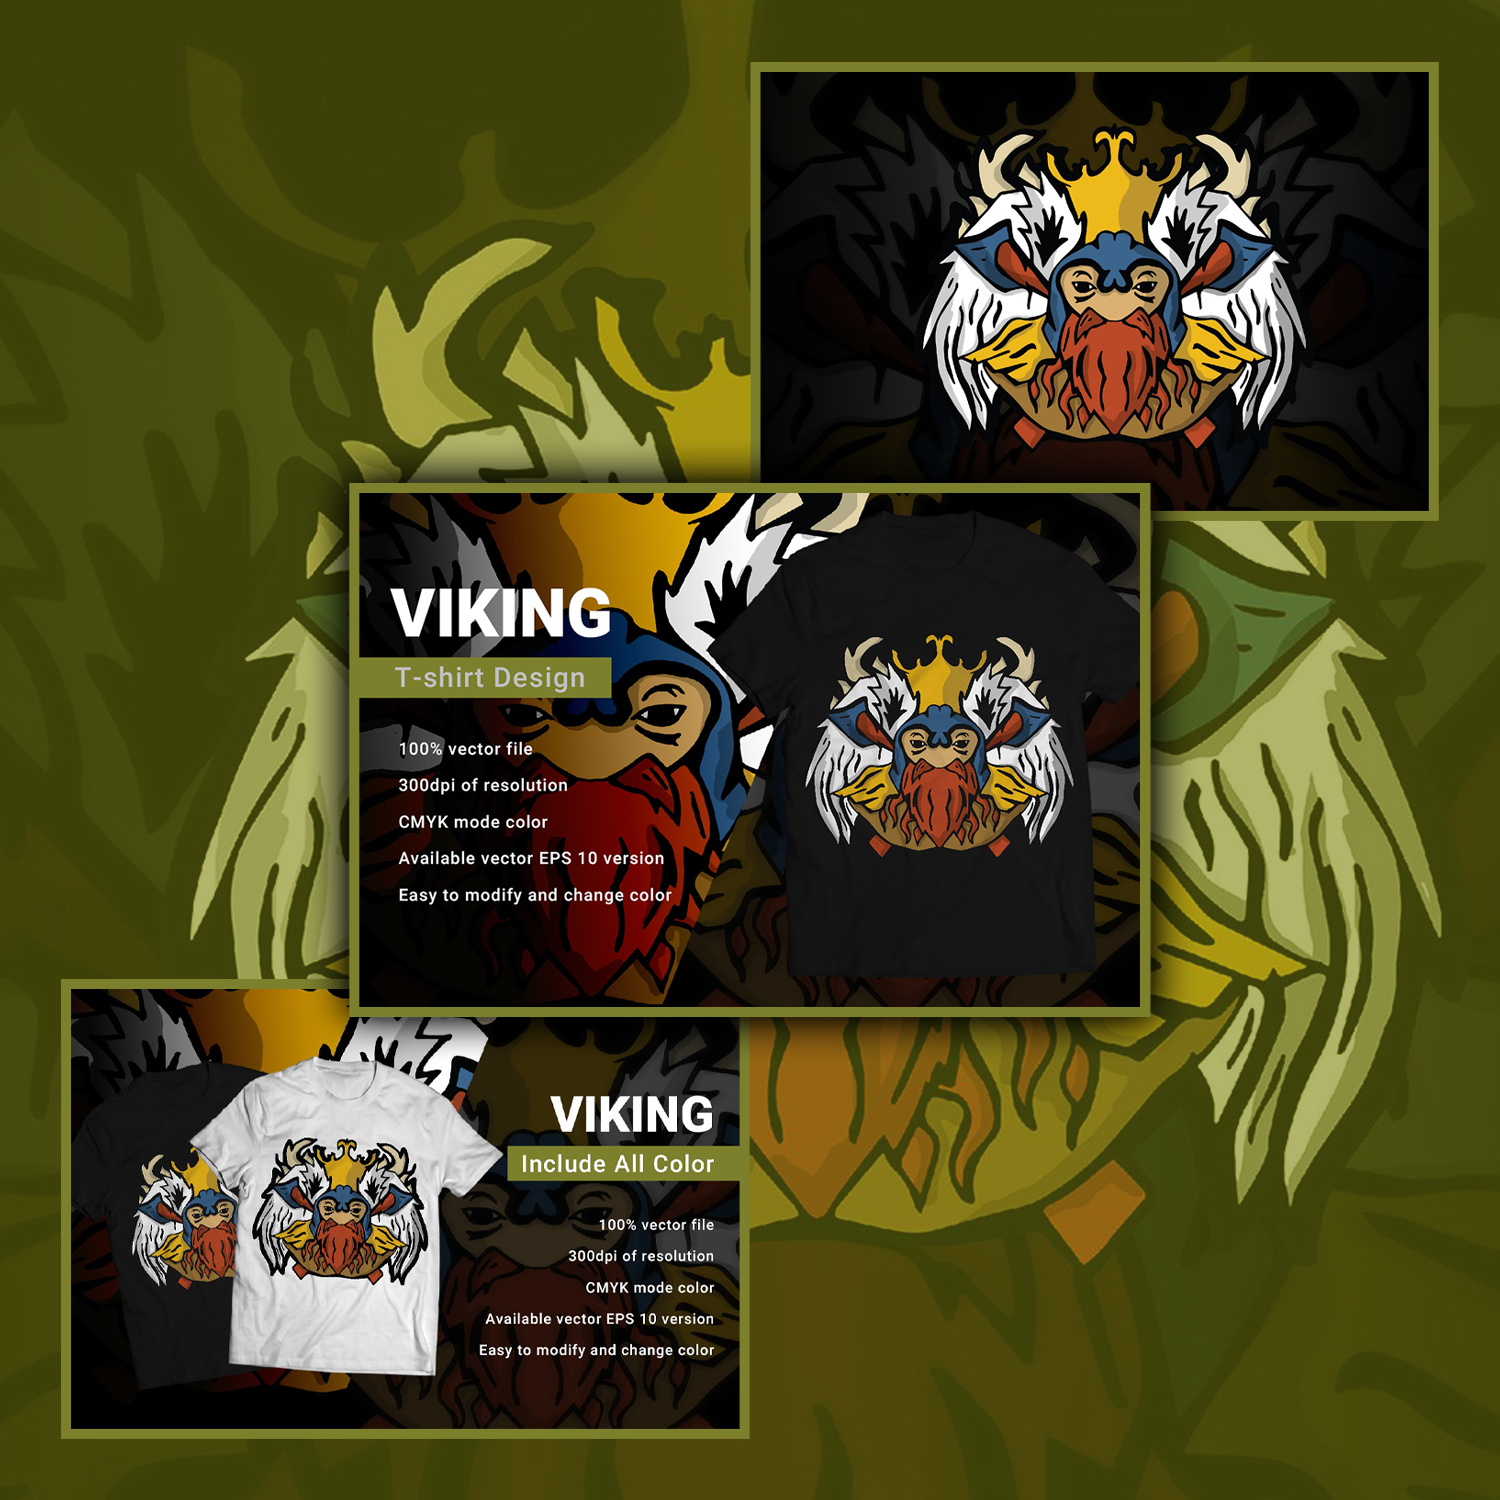 Viking | T-Shirt Design cover.